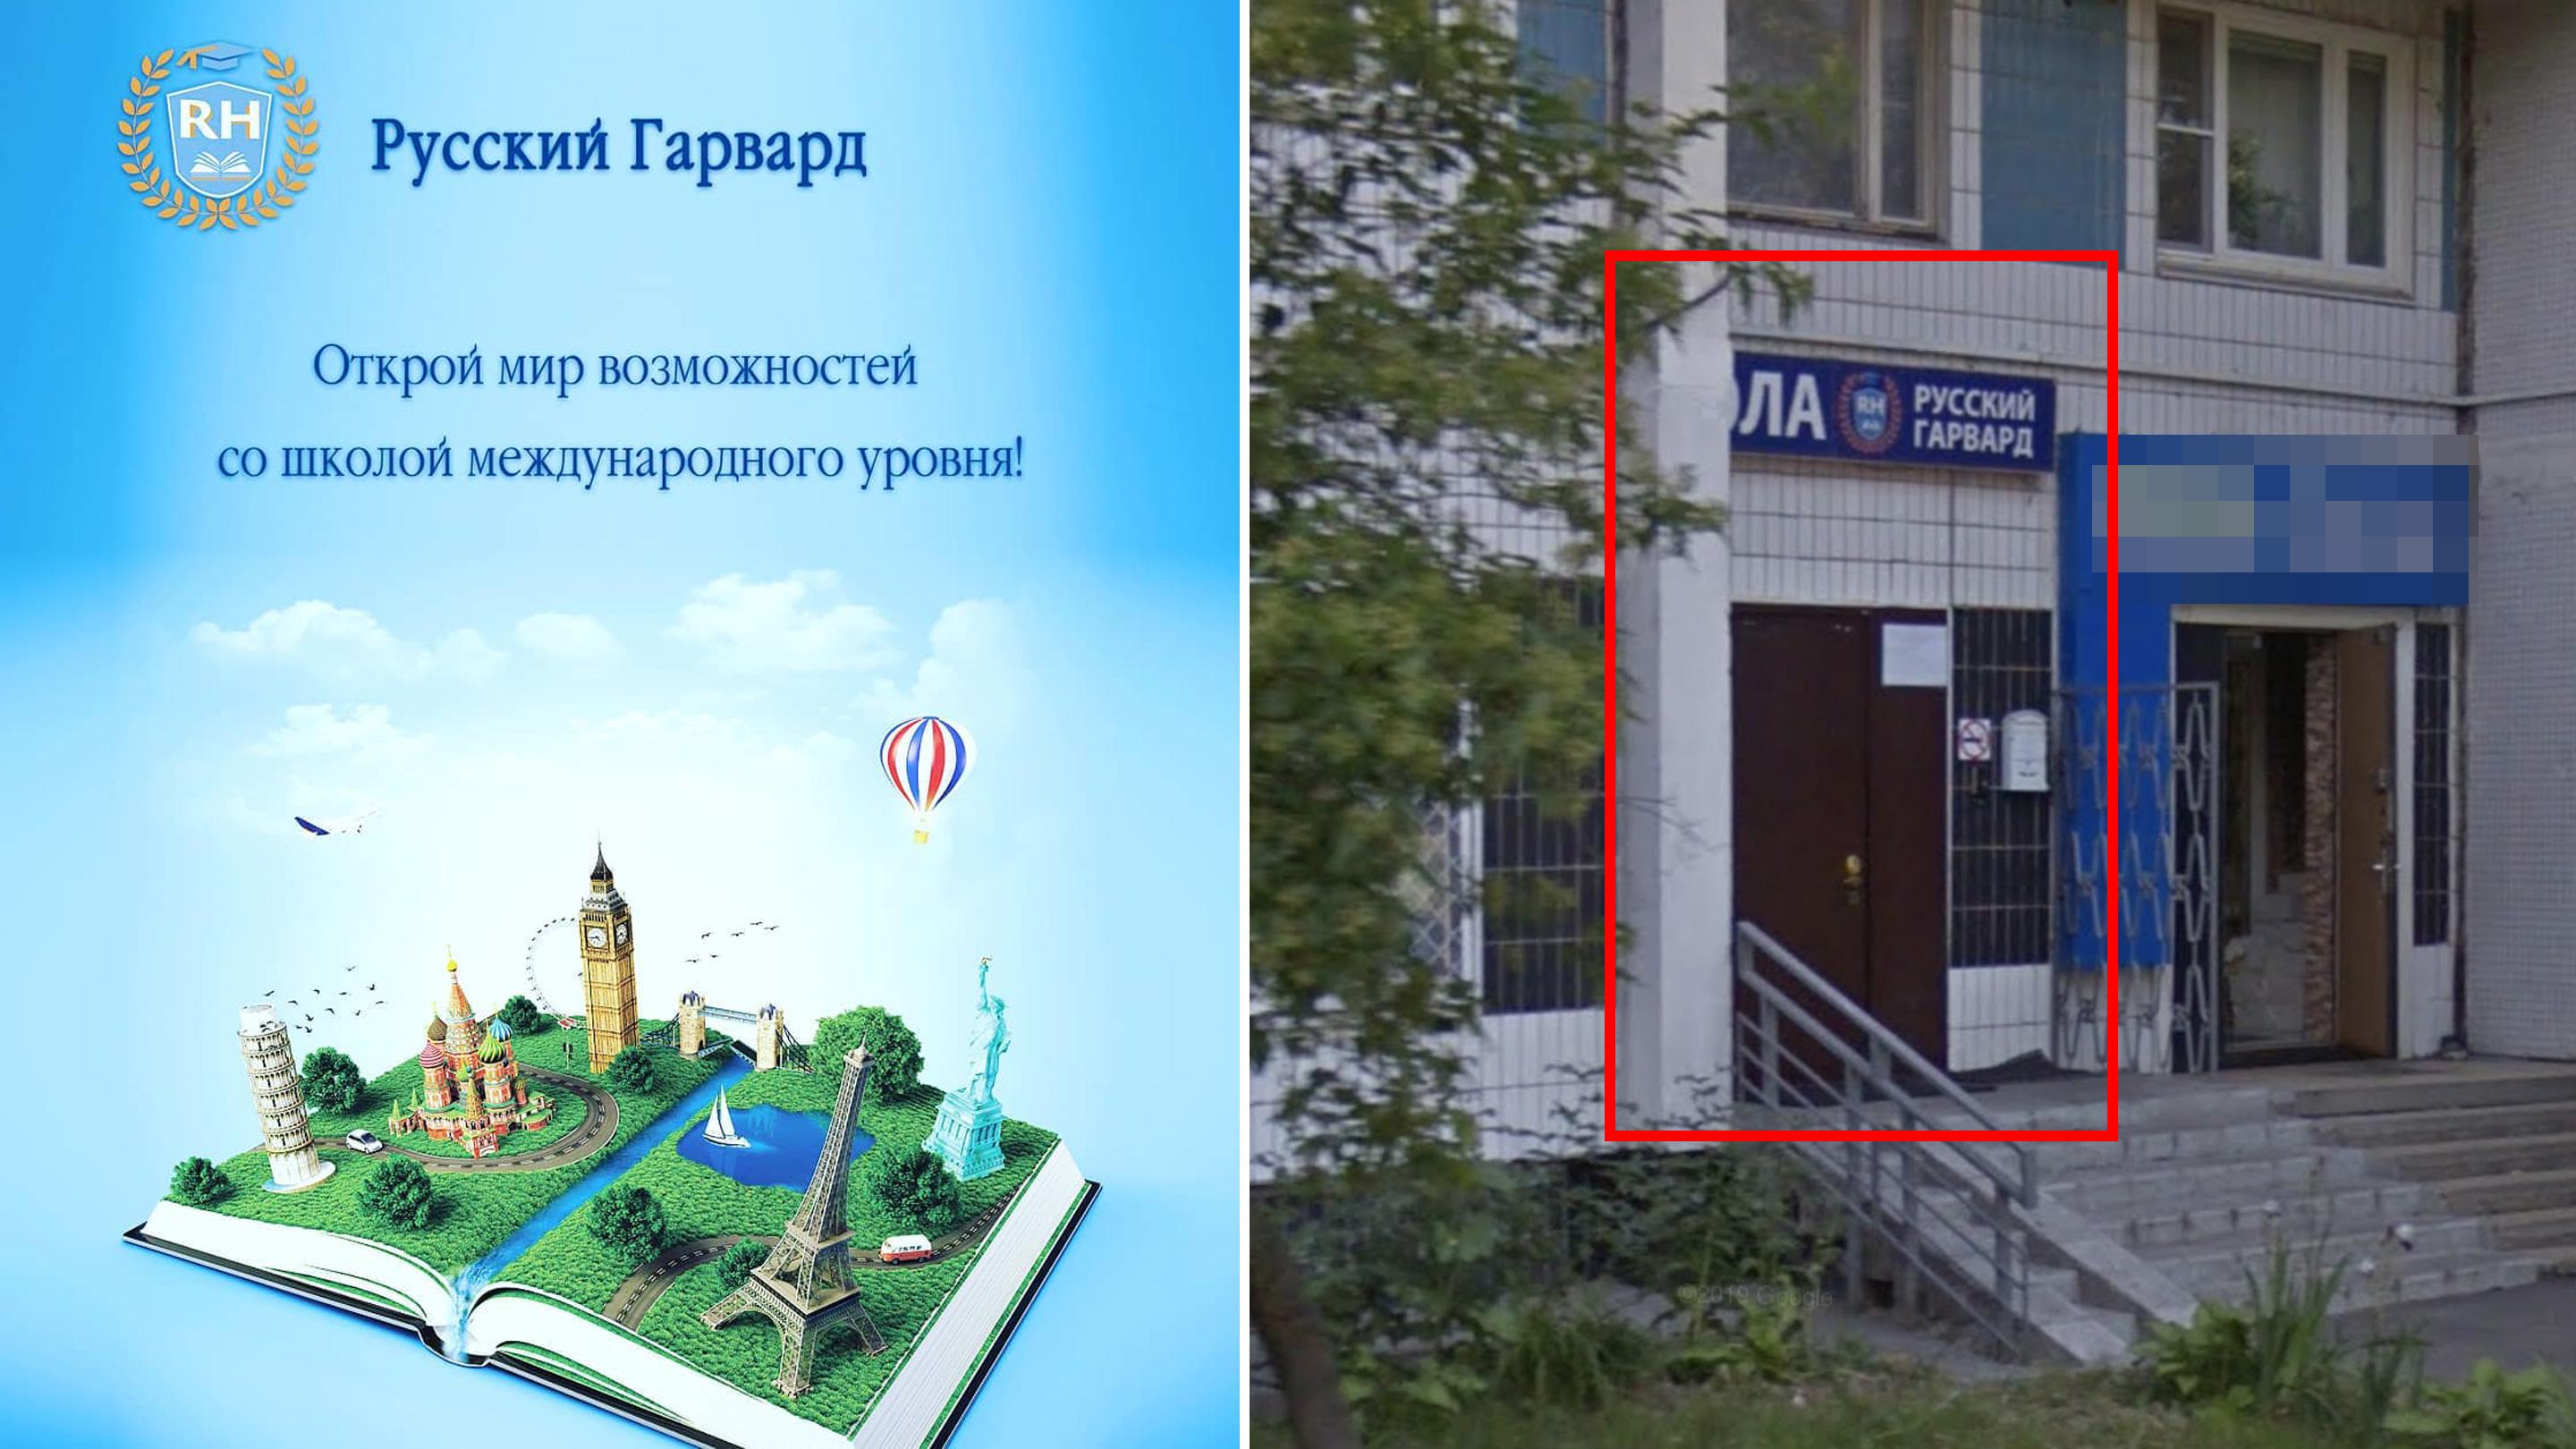 Реклама школы и сама школа в реальности / Фото © Instagram.com/russian_harvard_school © Google maps